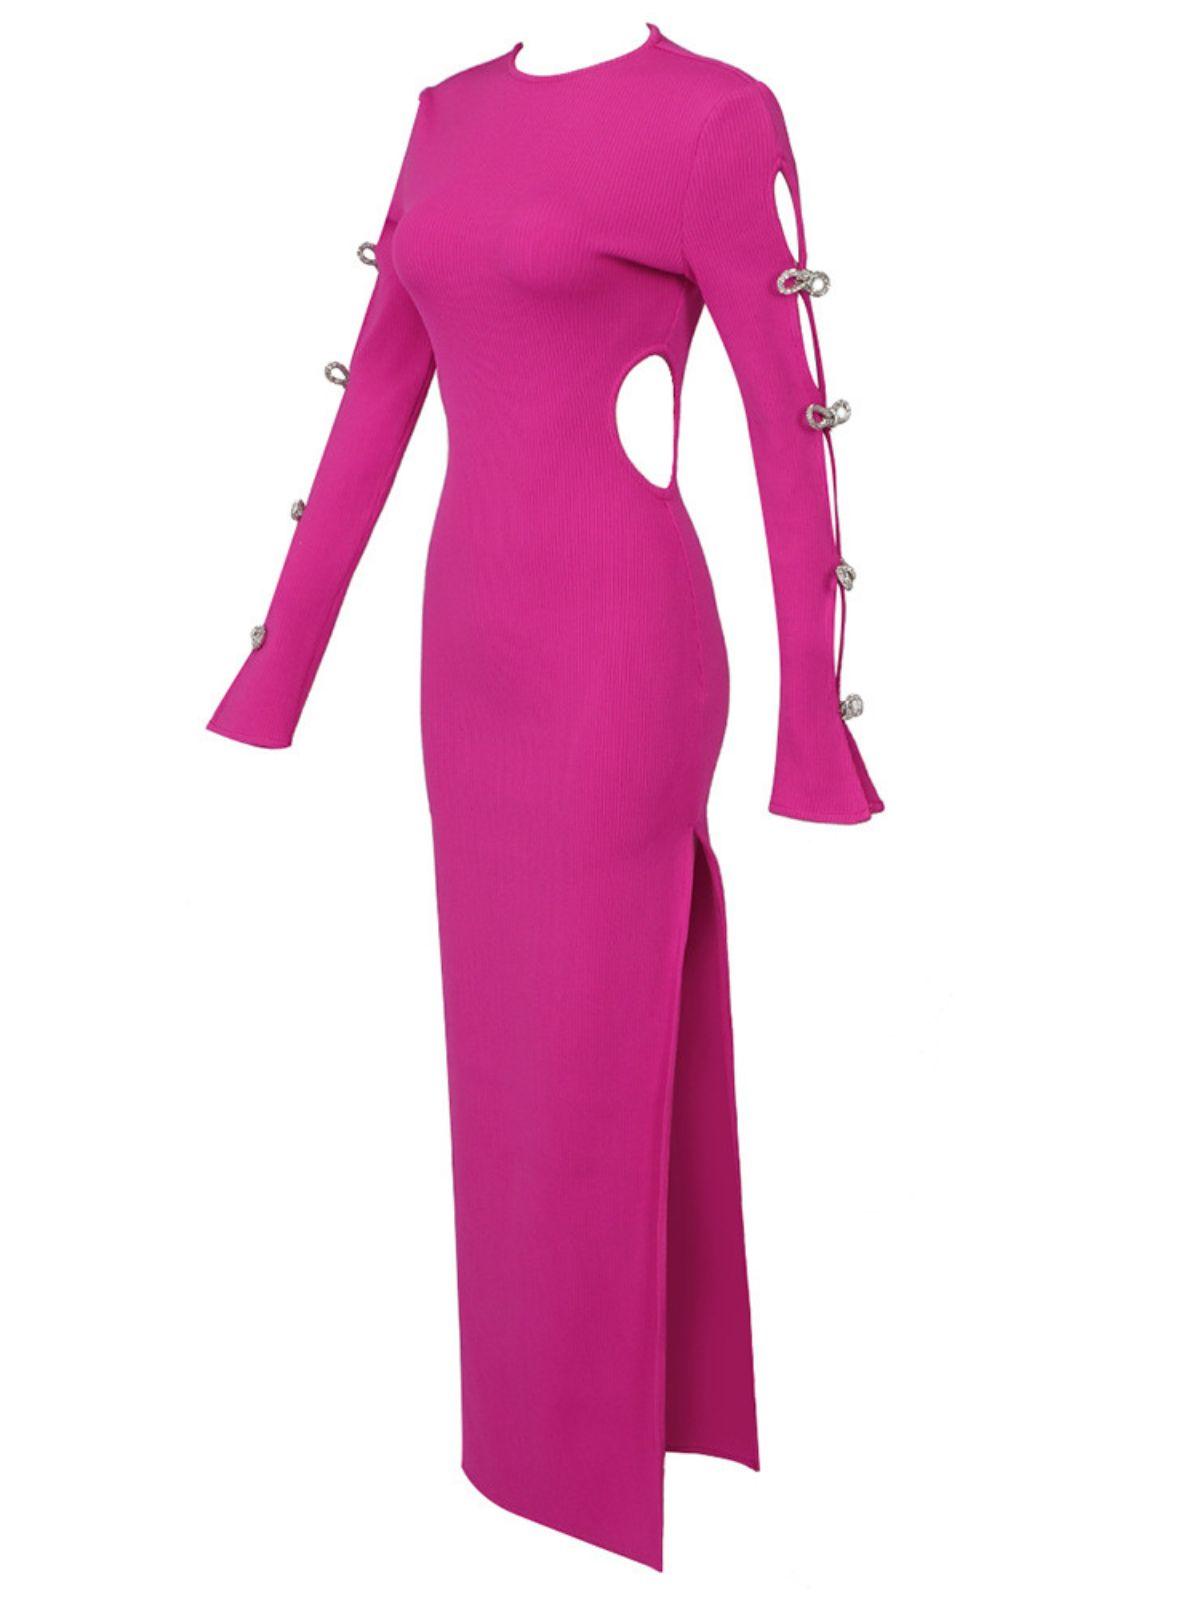 Calantha Crystal Bow Cutout Bandage Dress